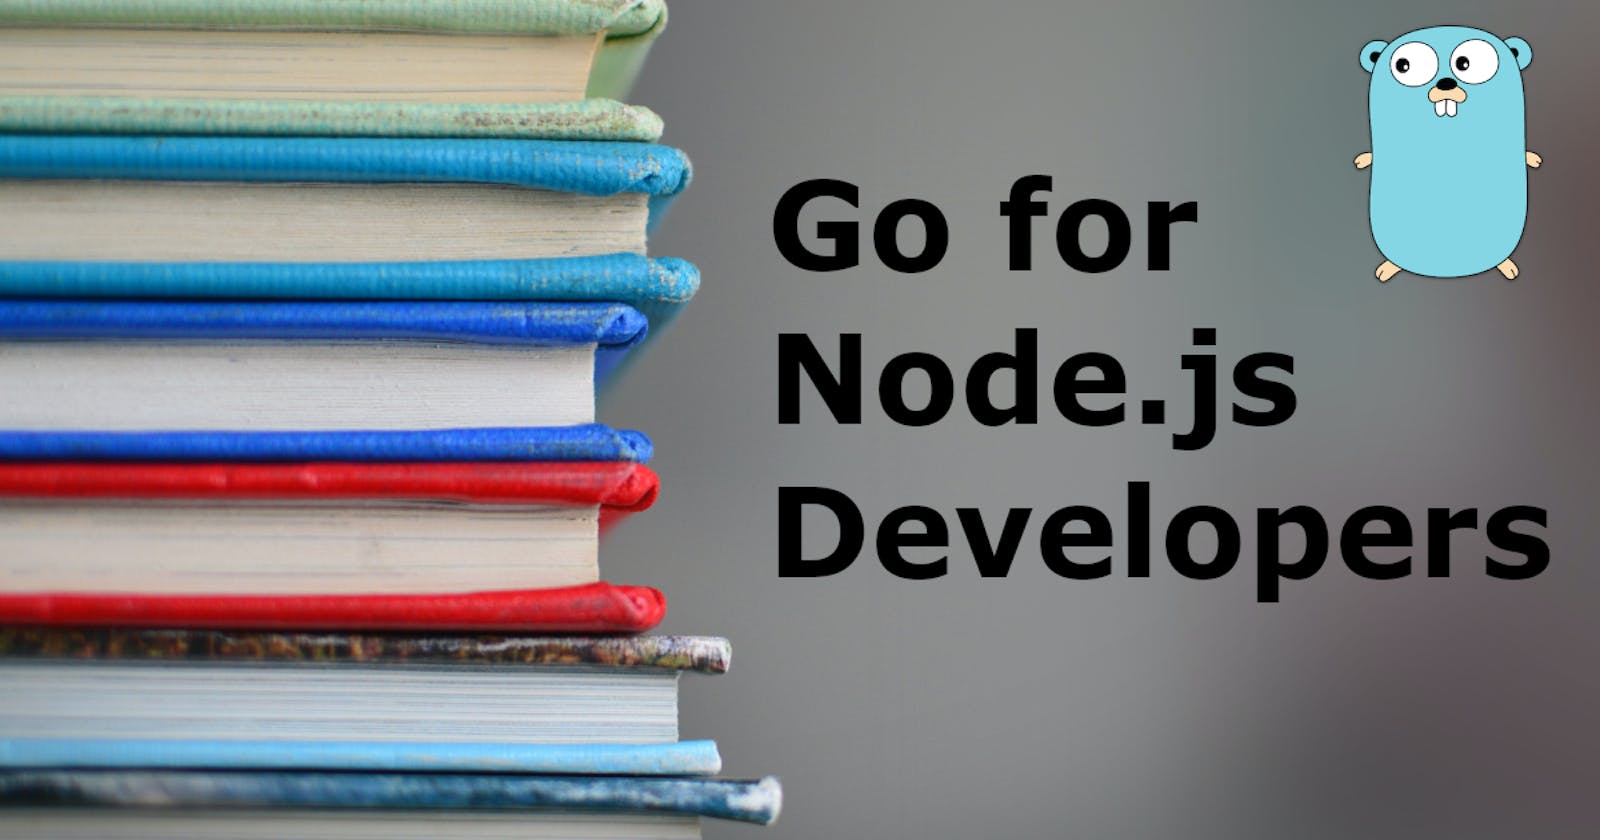 Learning Go as a Node.js Developer